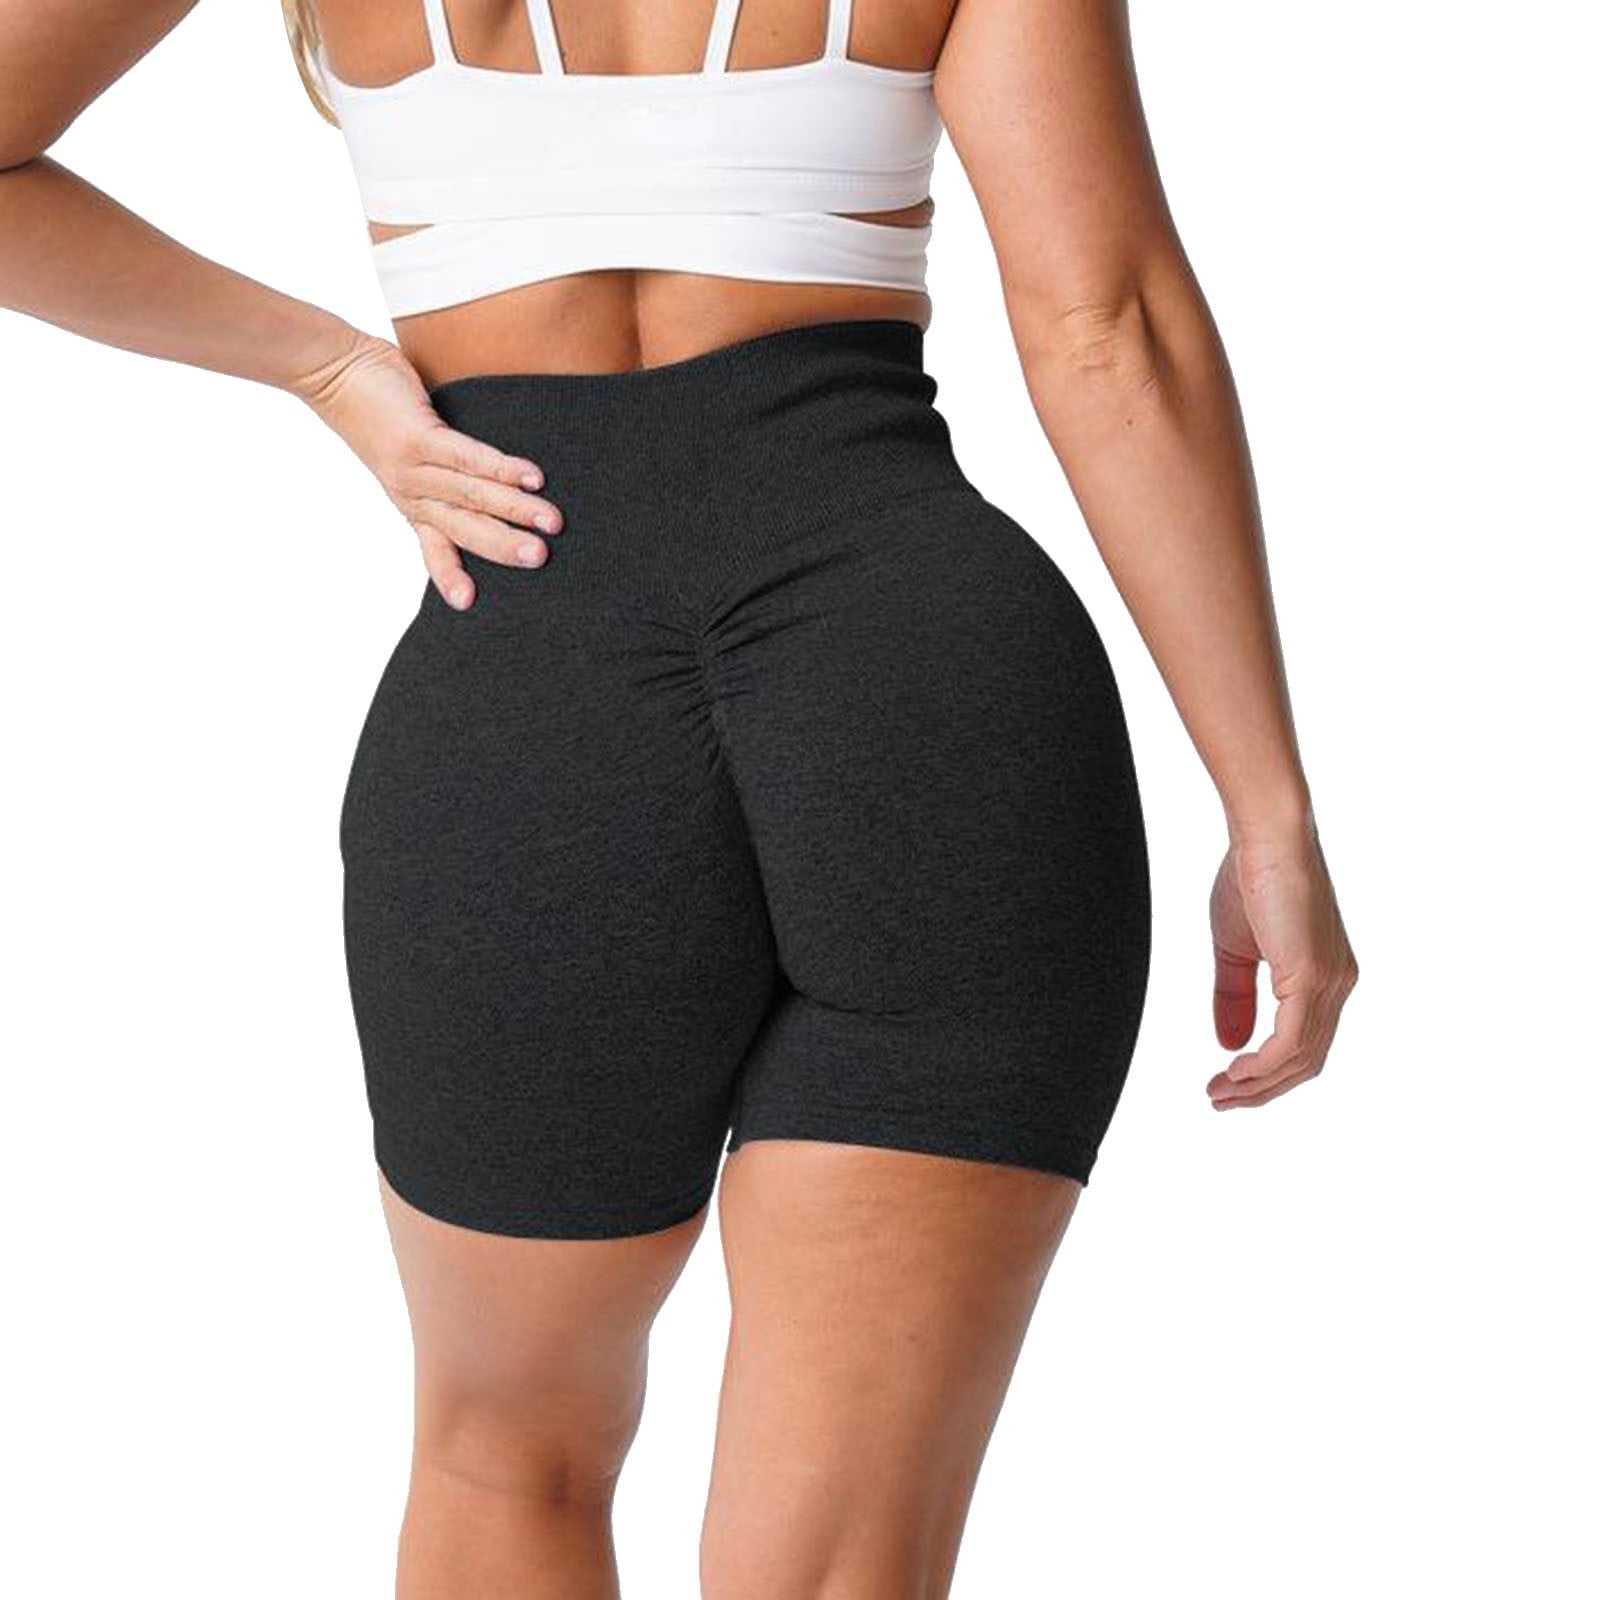 Baocc Yoga Pants Women Tummy Control Fitness Athletic Workout